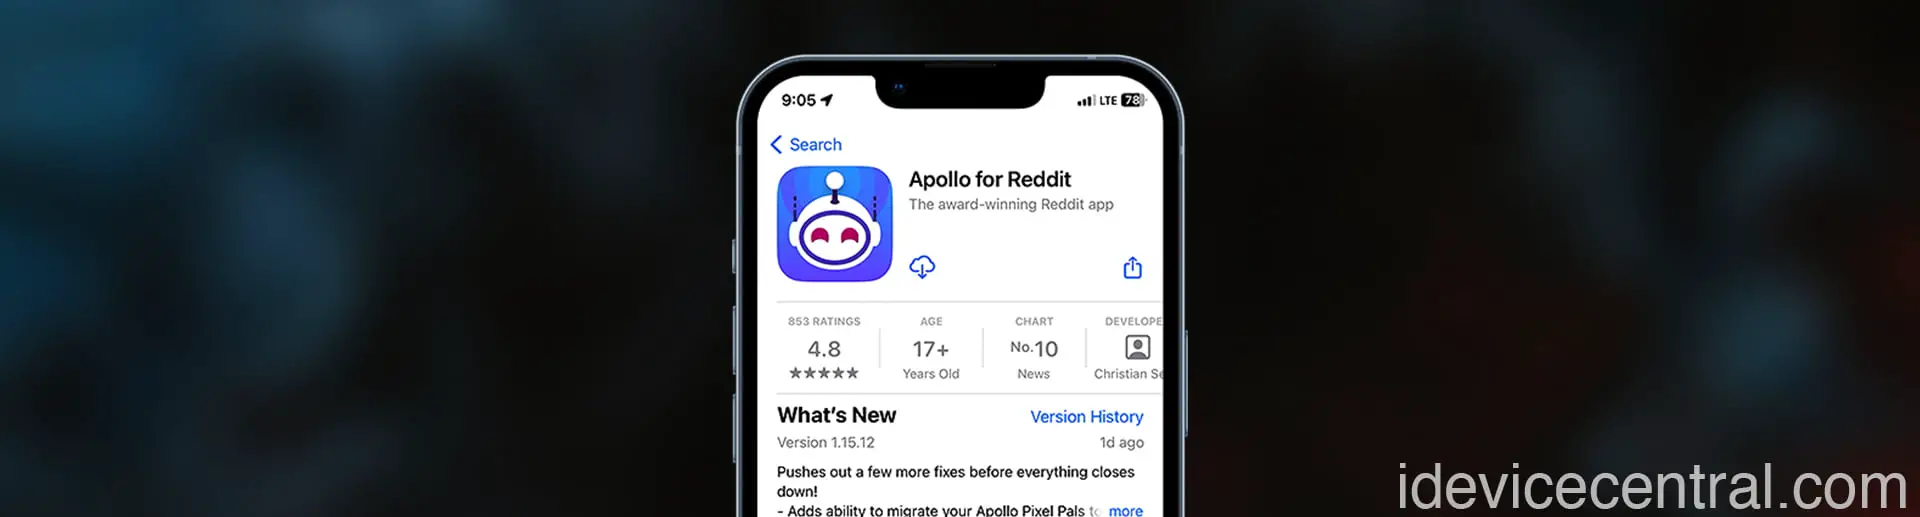 How To Fix Apollo Reddit Client With a Personal API Key Using ApolloAPI on iOS